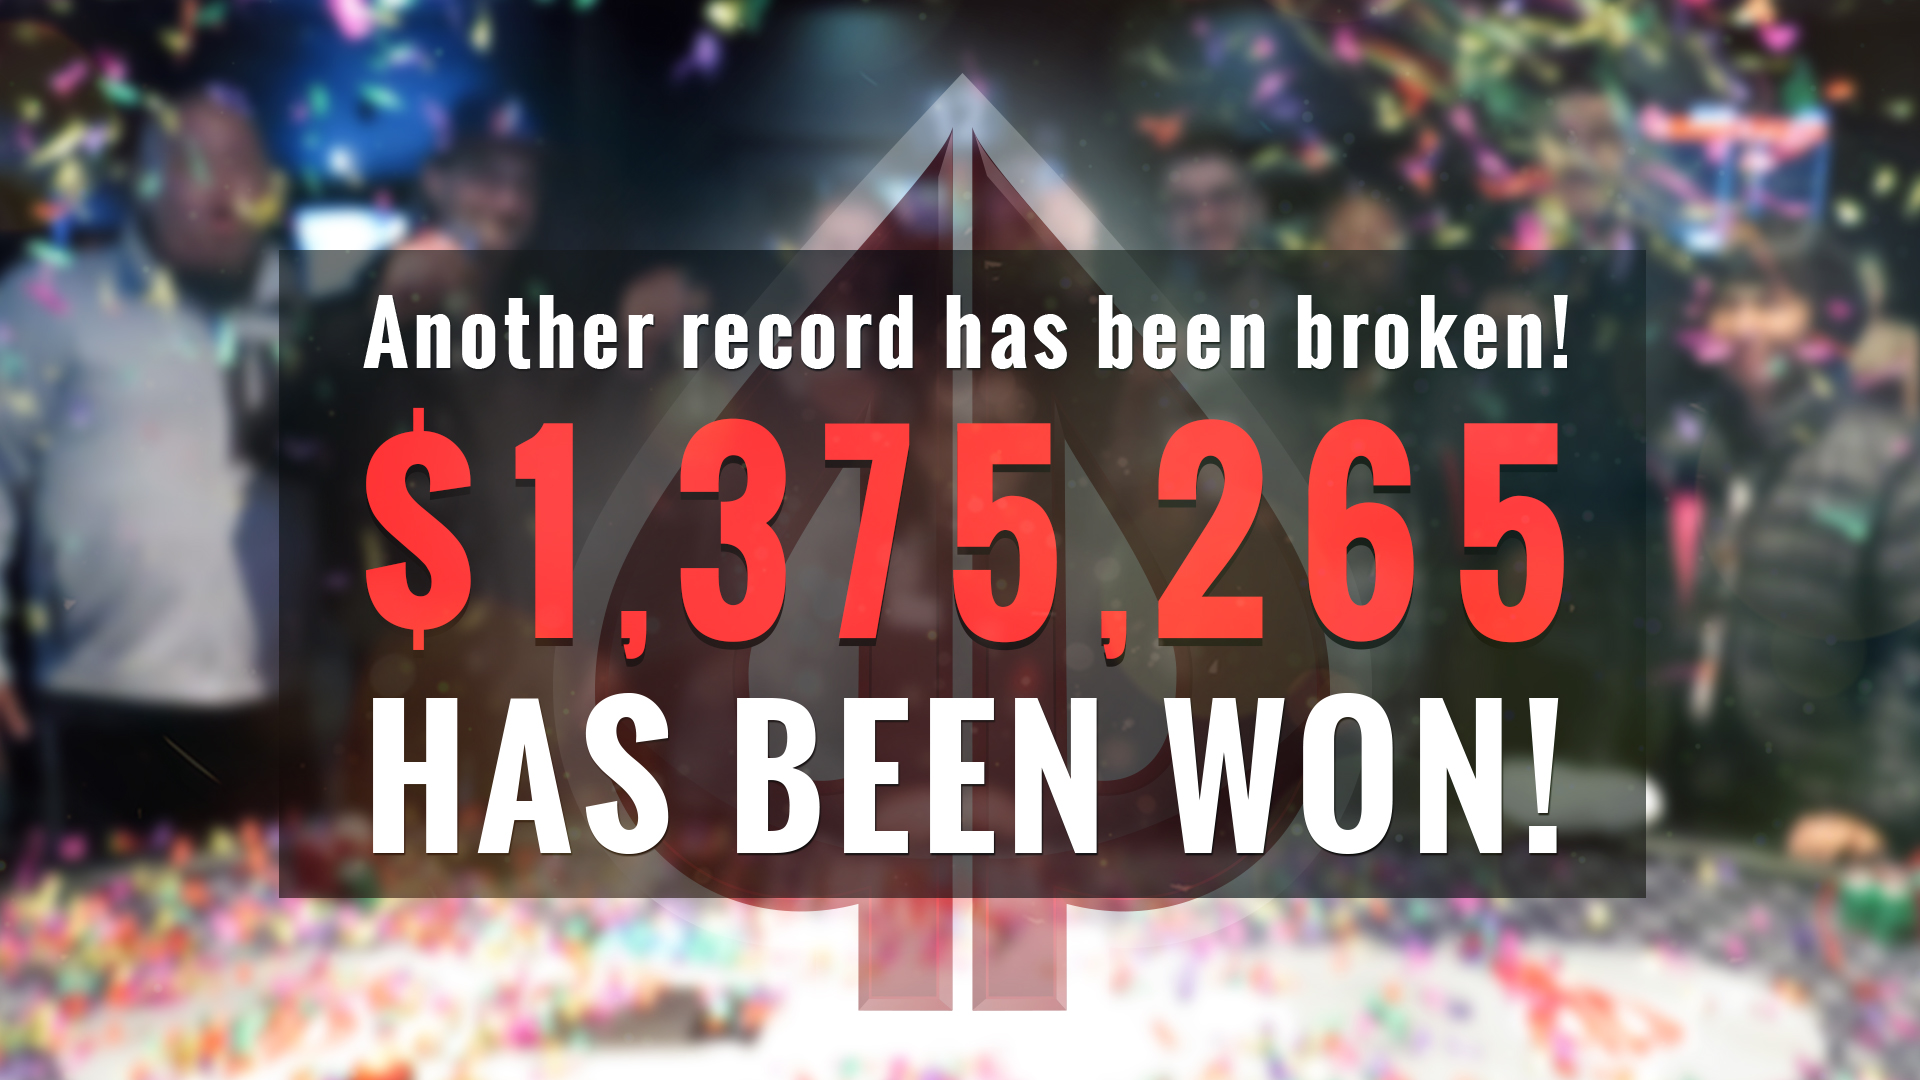 The $1.375M Primary BBJ has been won!